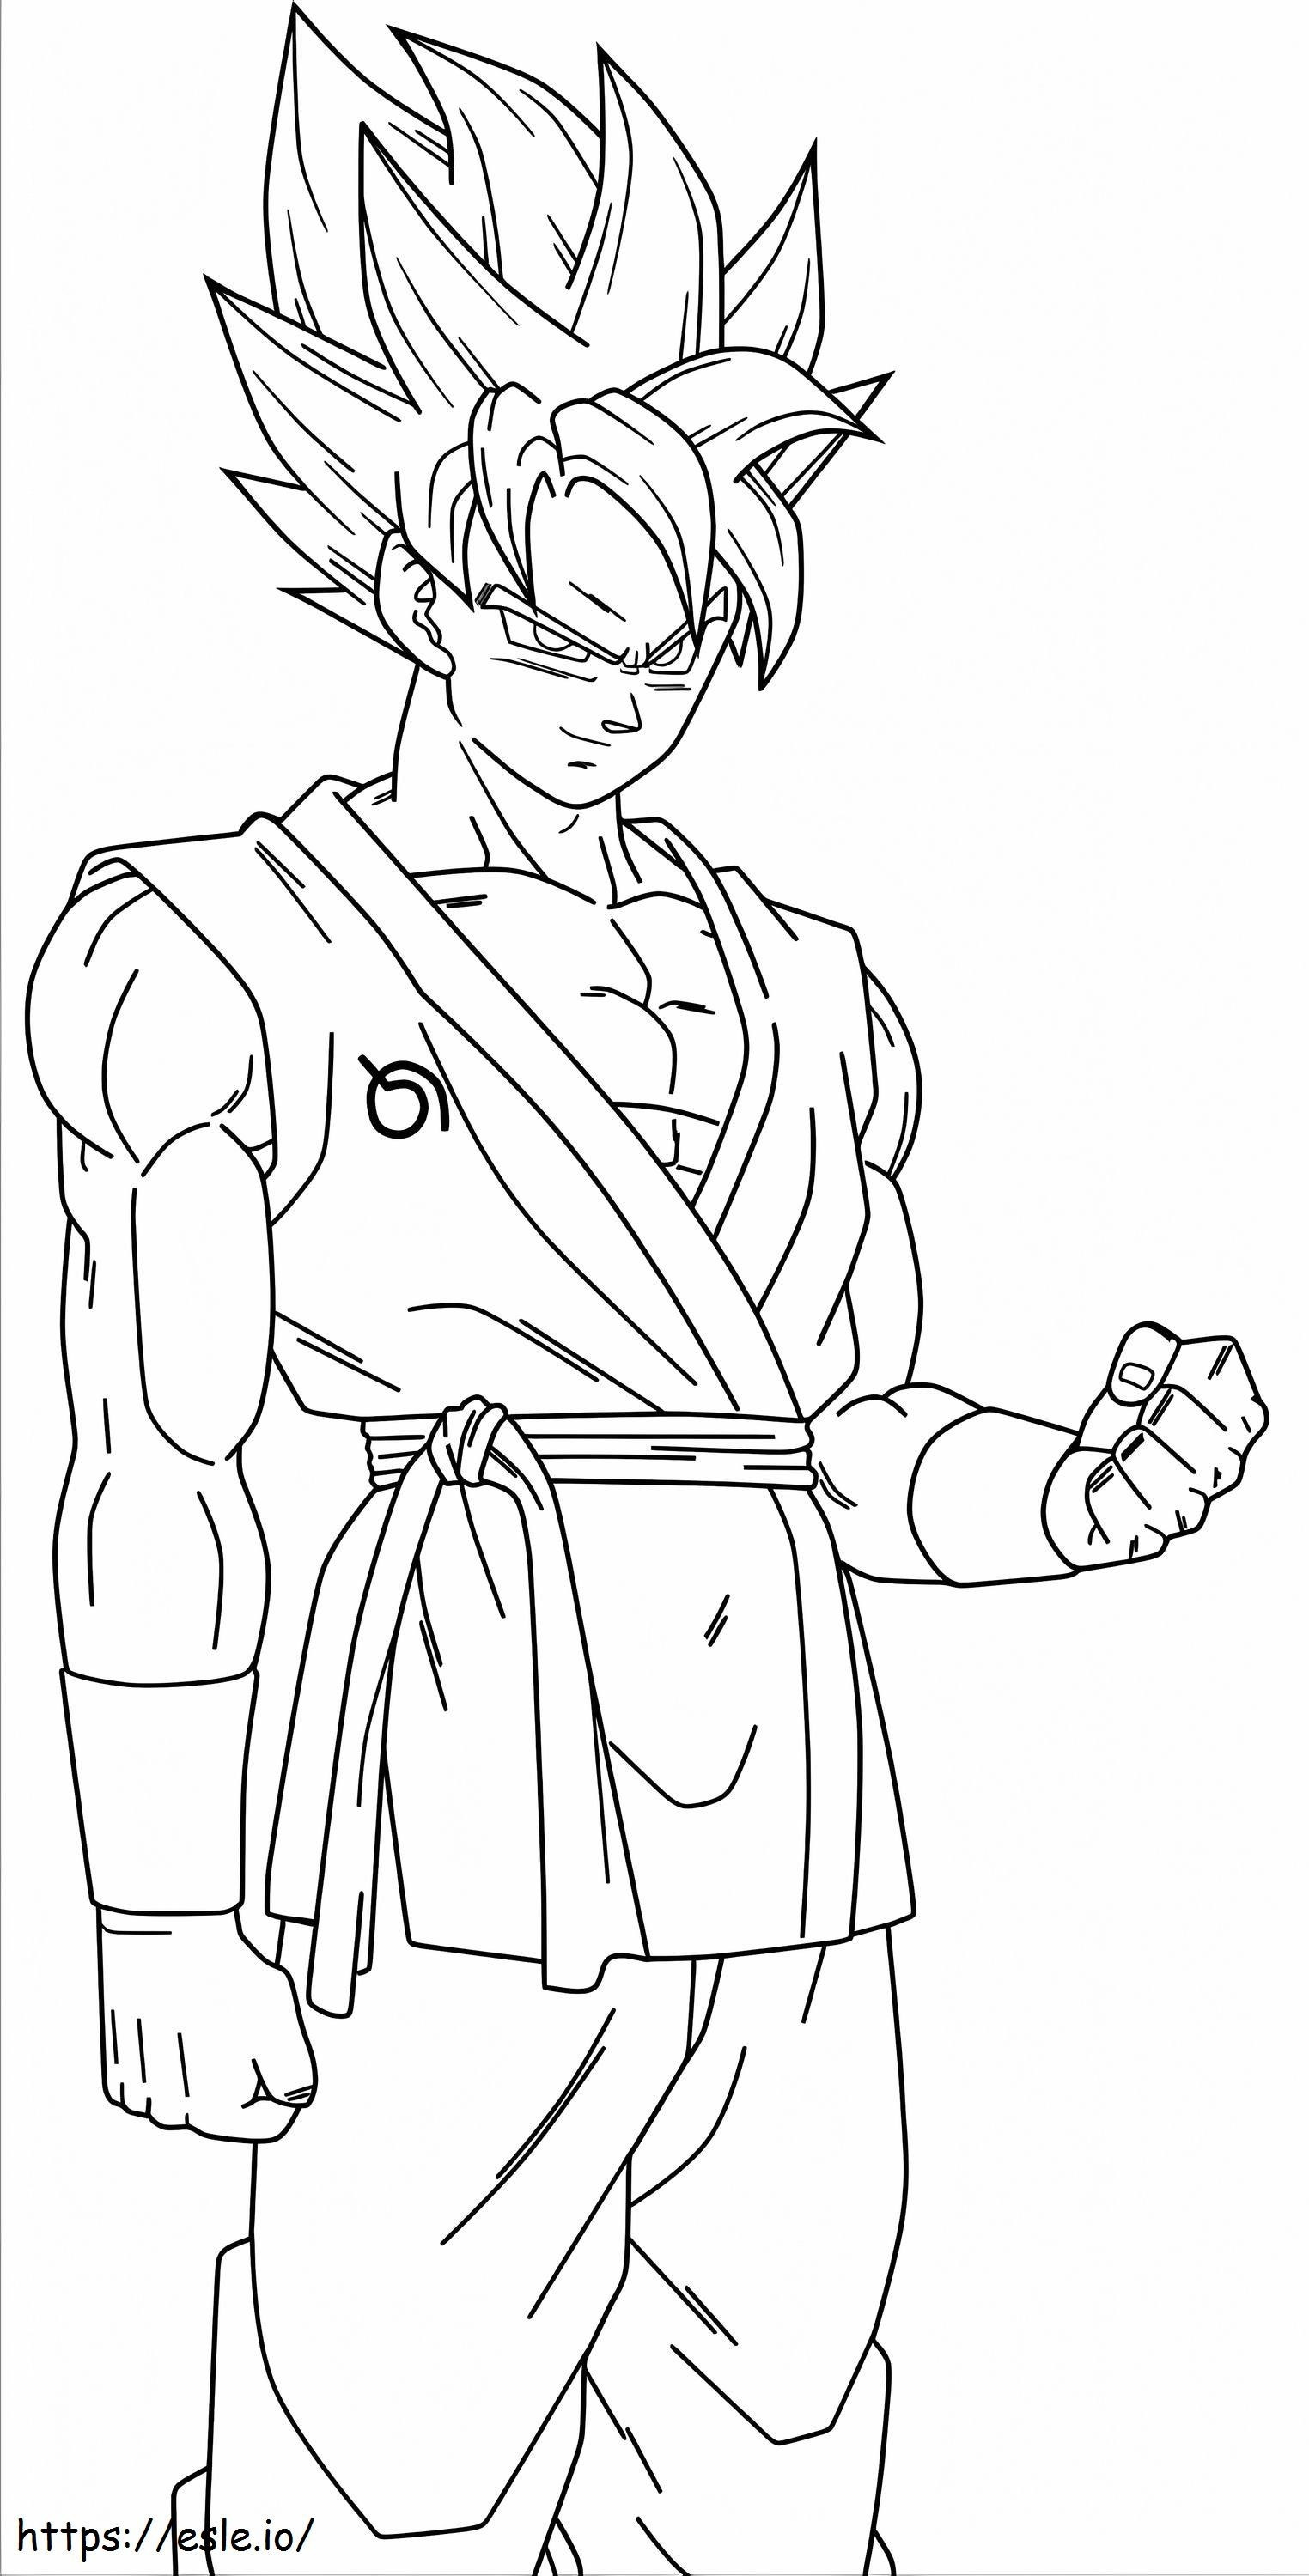 Goku sorridente para colorir